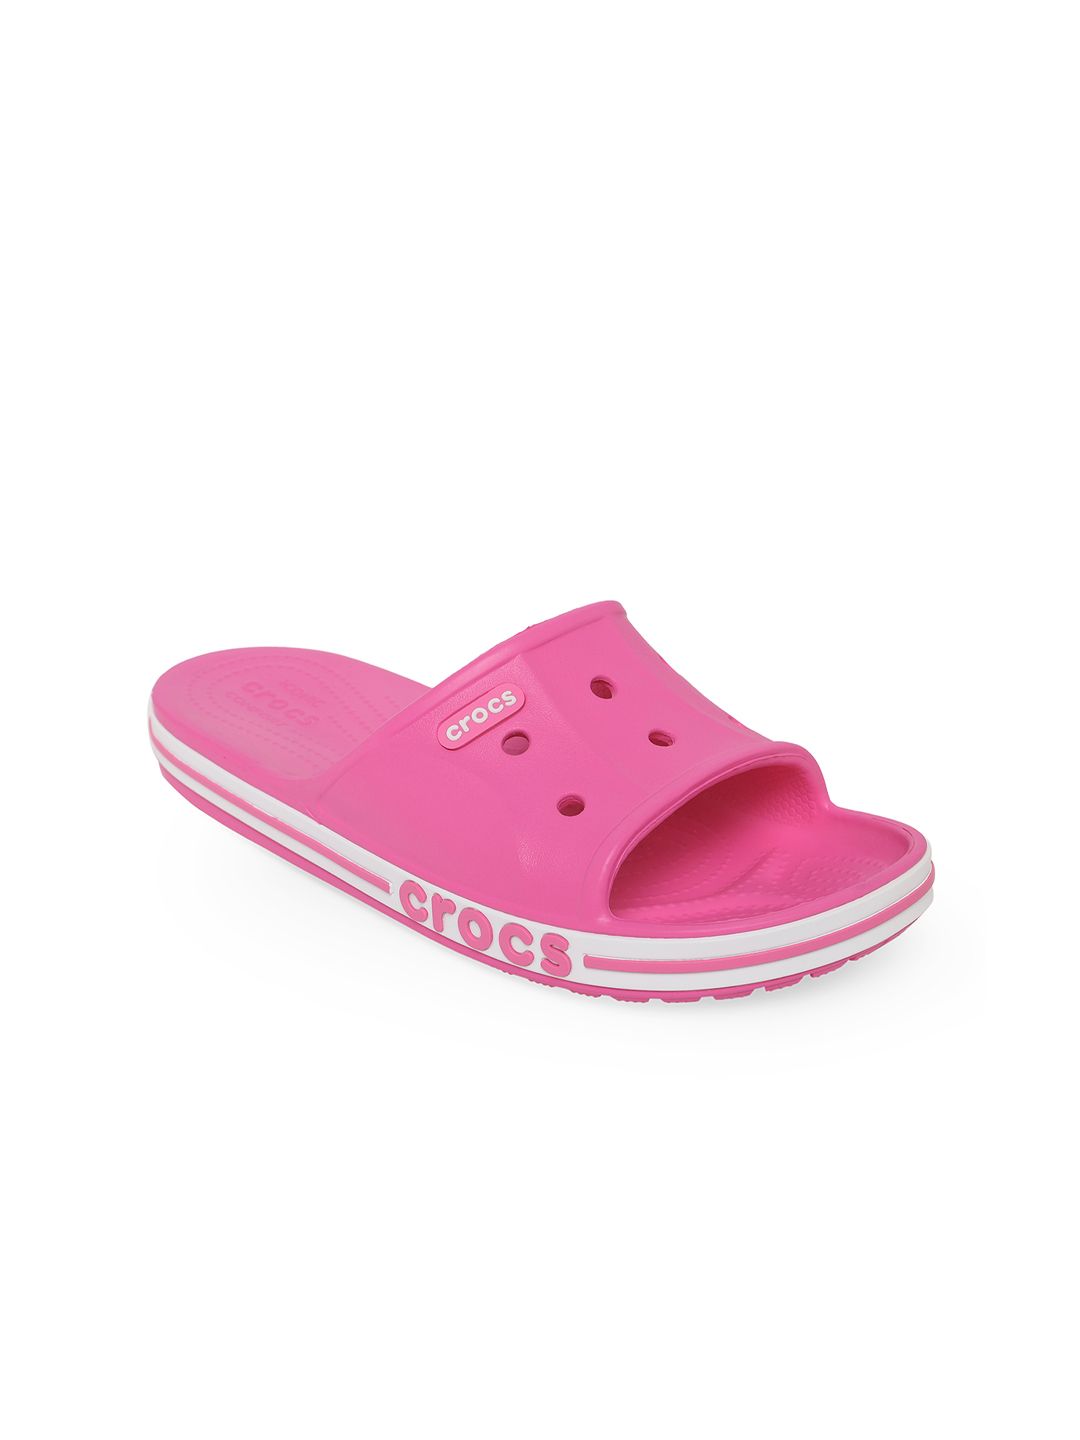 Crocs Bayaband  Women Pink Solid Sliders Price in India